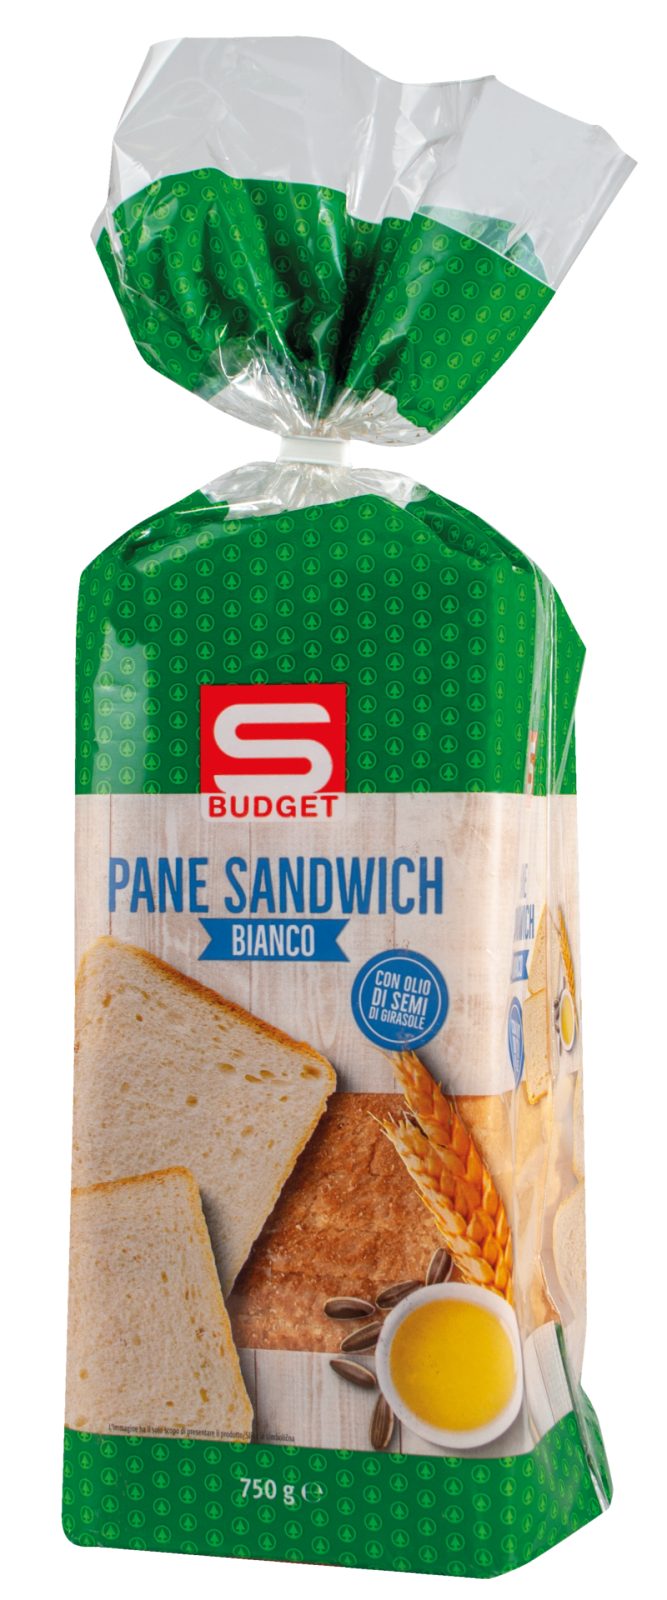 Pane Sandwich Bianco